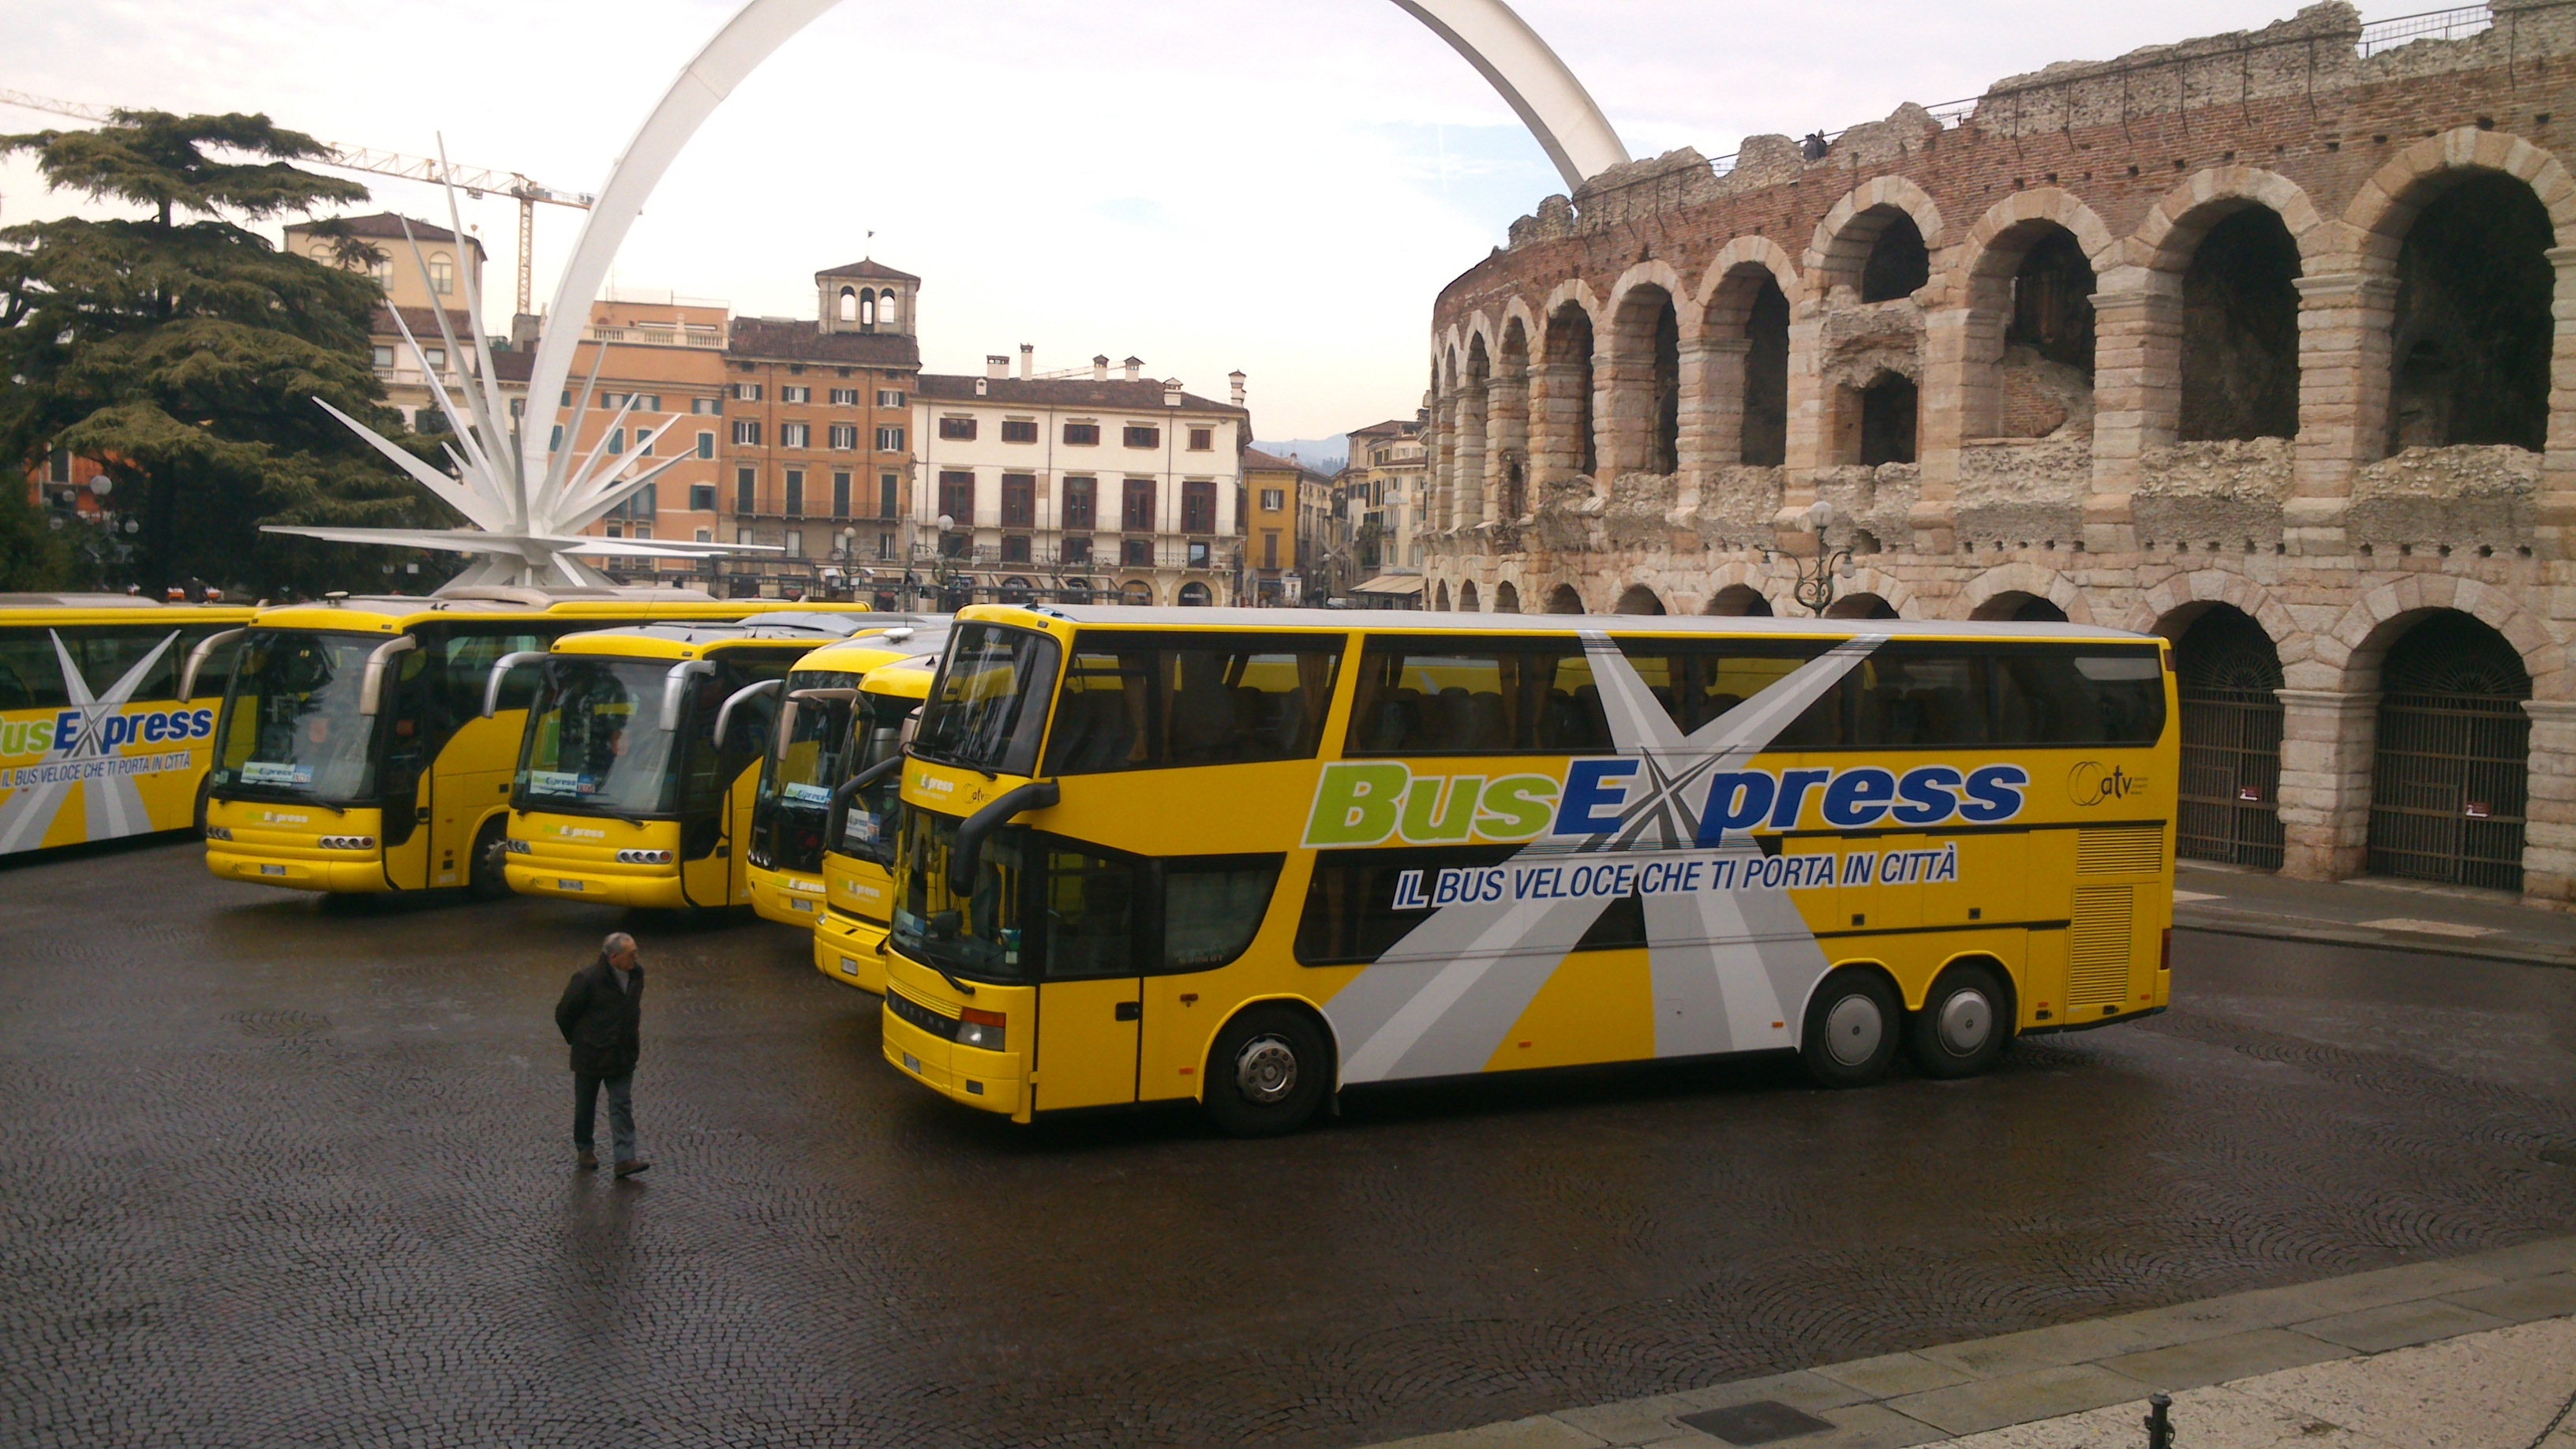 Bus Express - Foto Comune di Verona